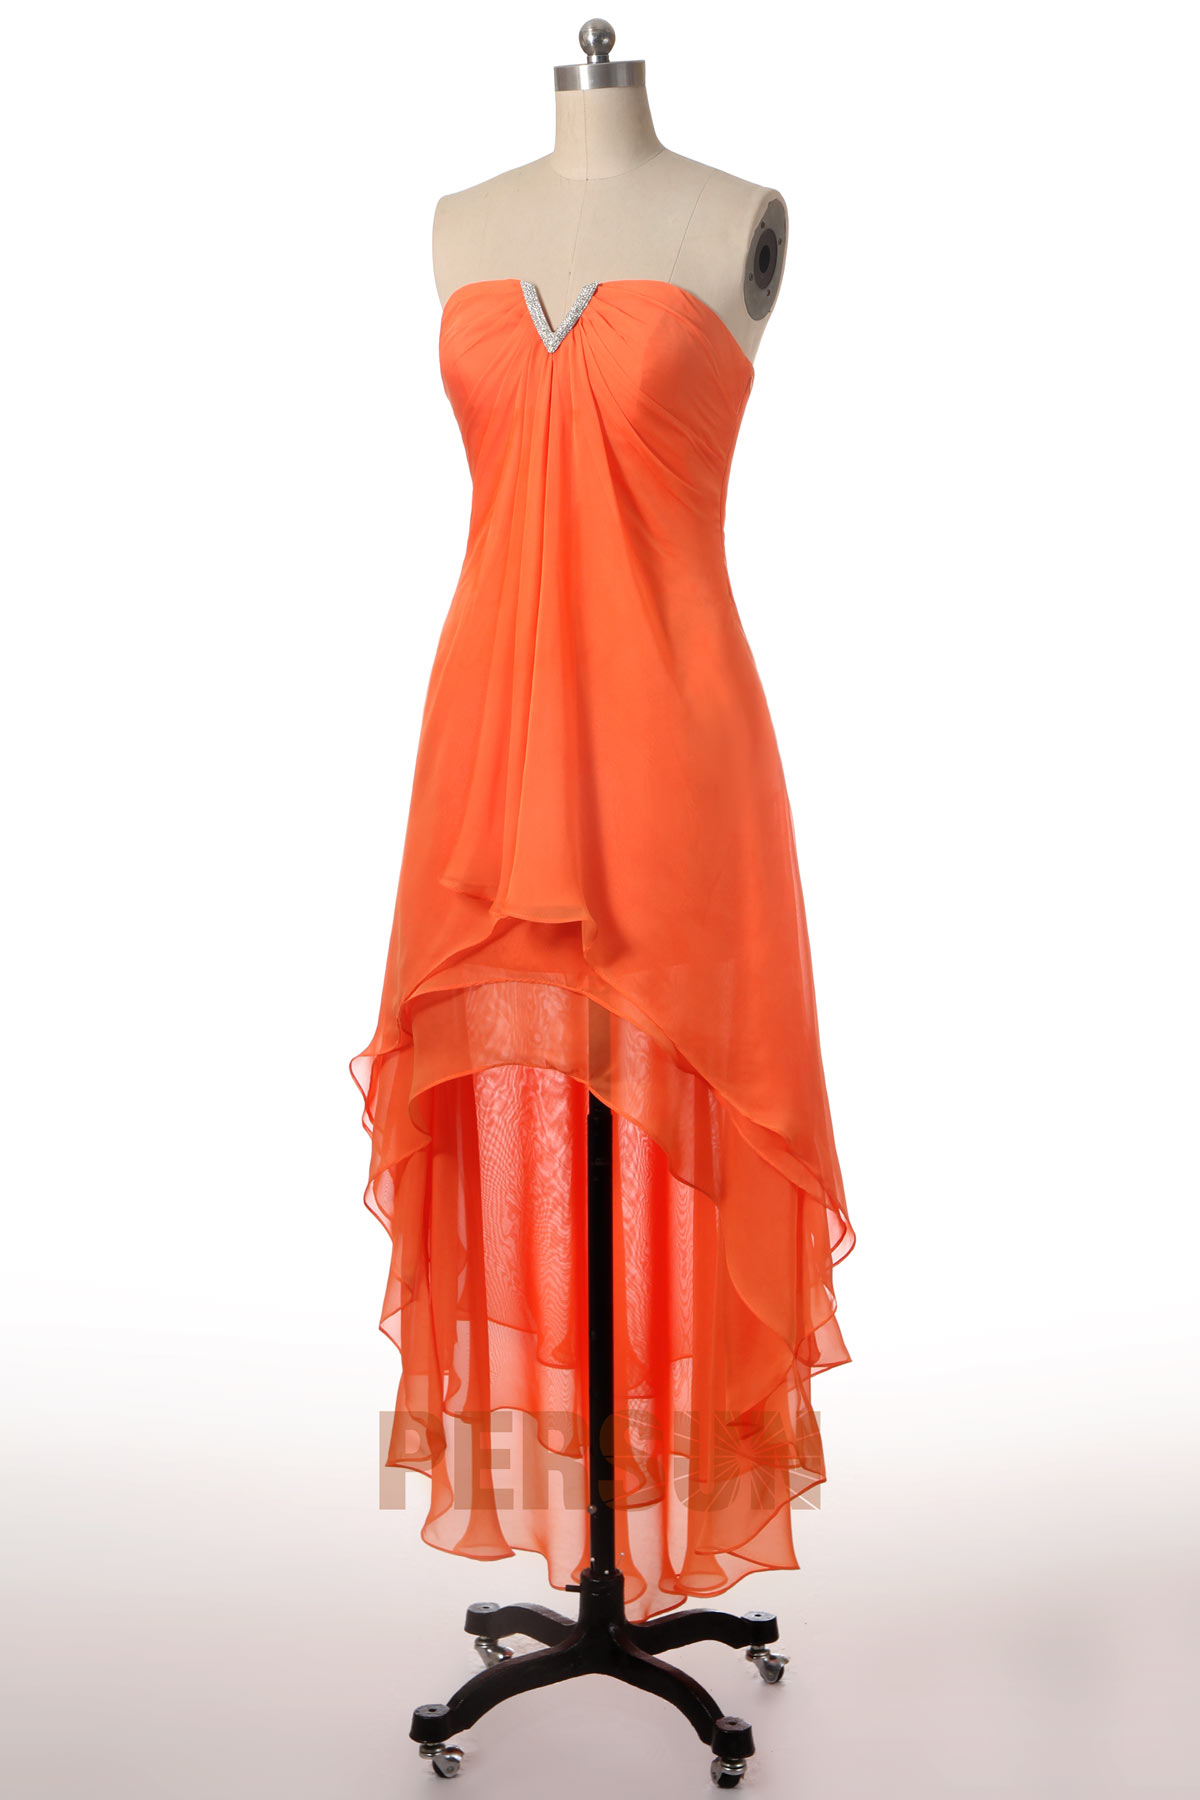 robe-cocktail-orange-encolure-djellaba.jpg?profile=RESIZE_710x